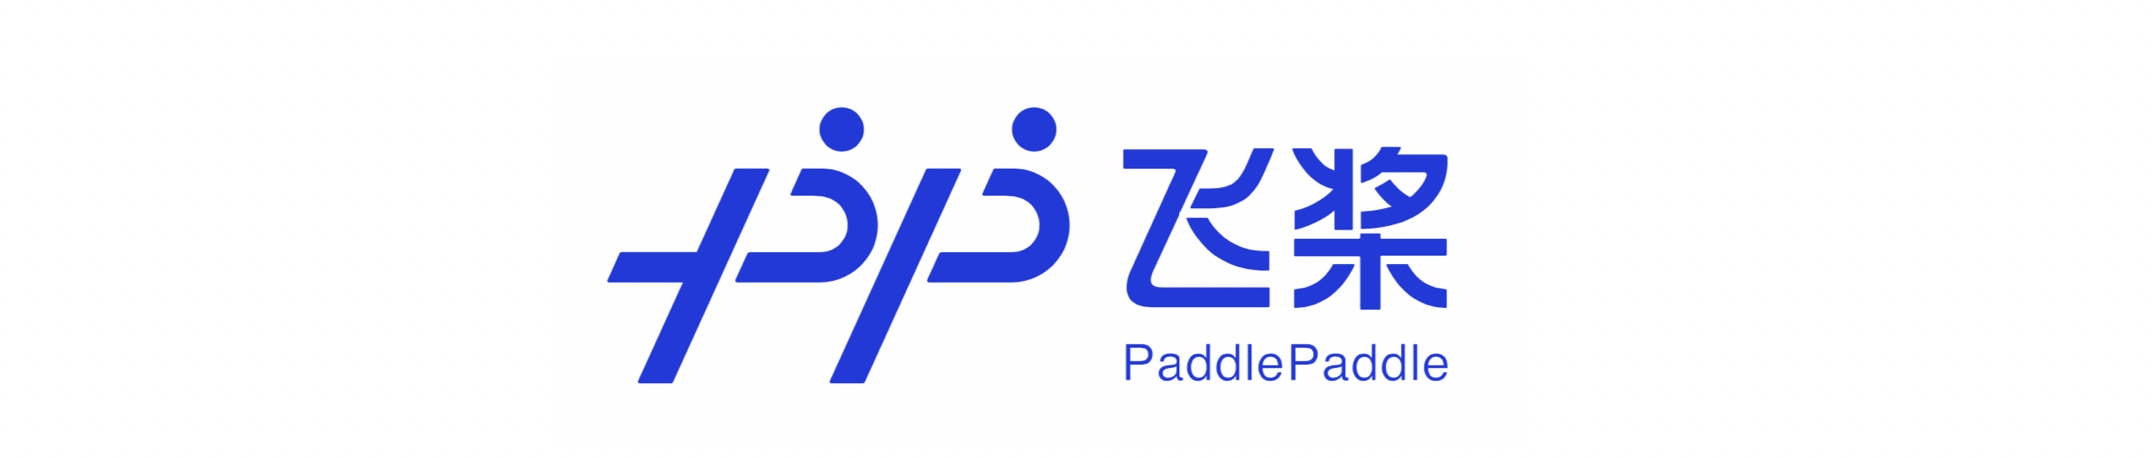 PaddlePaddle Логотип